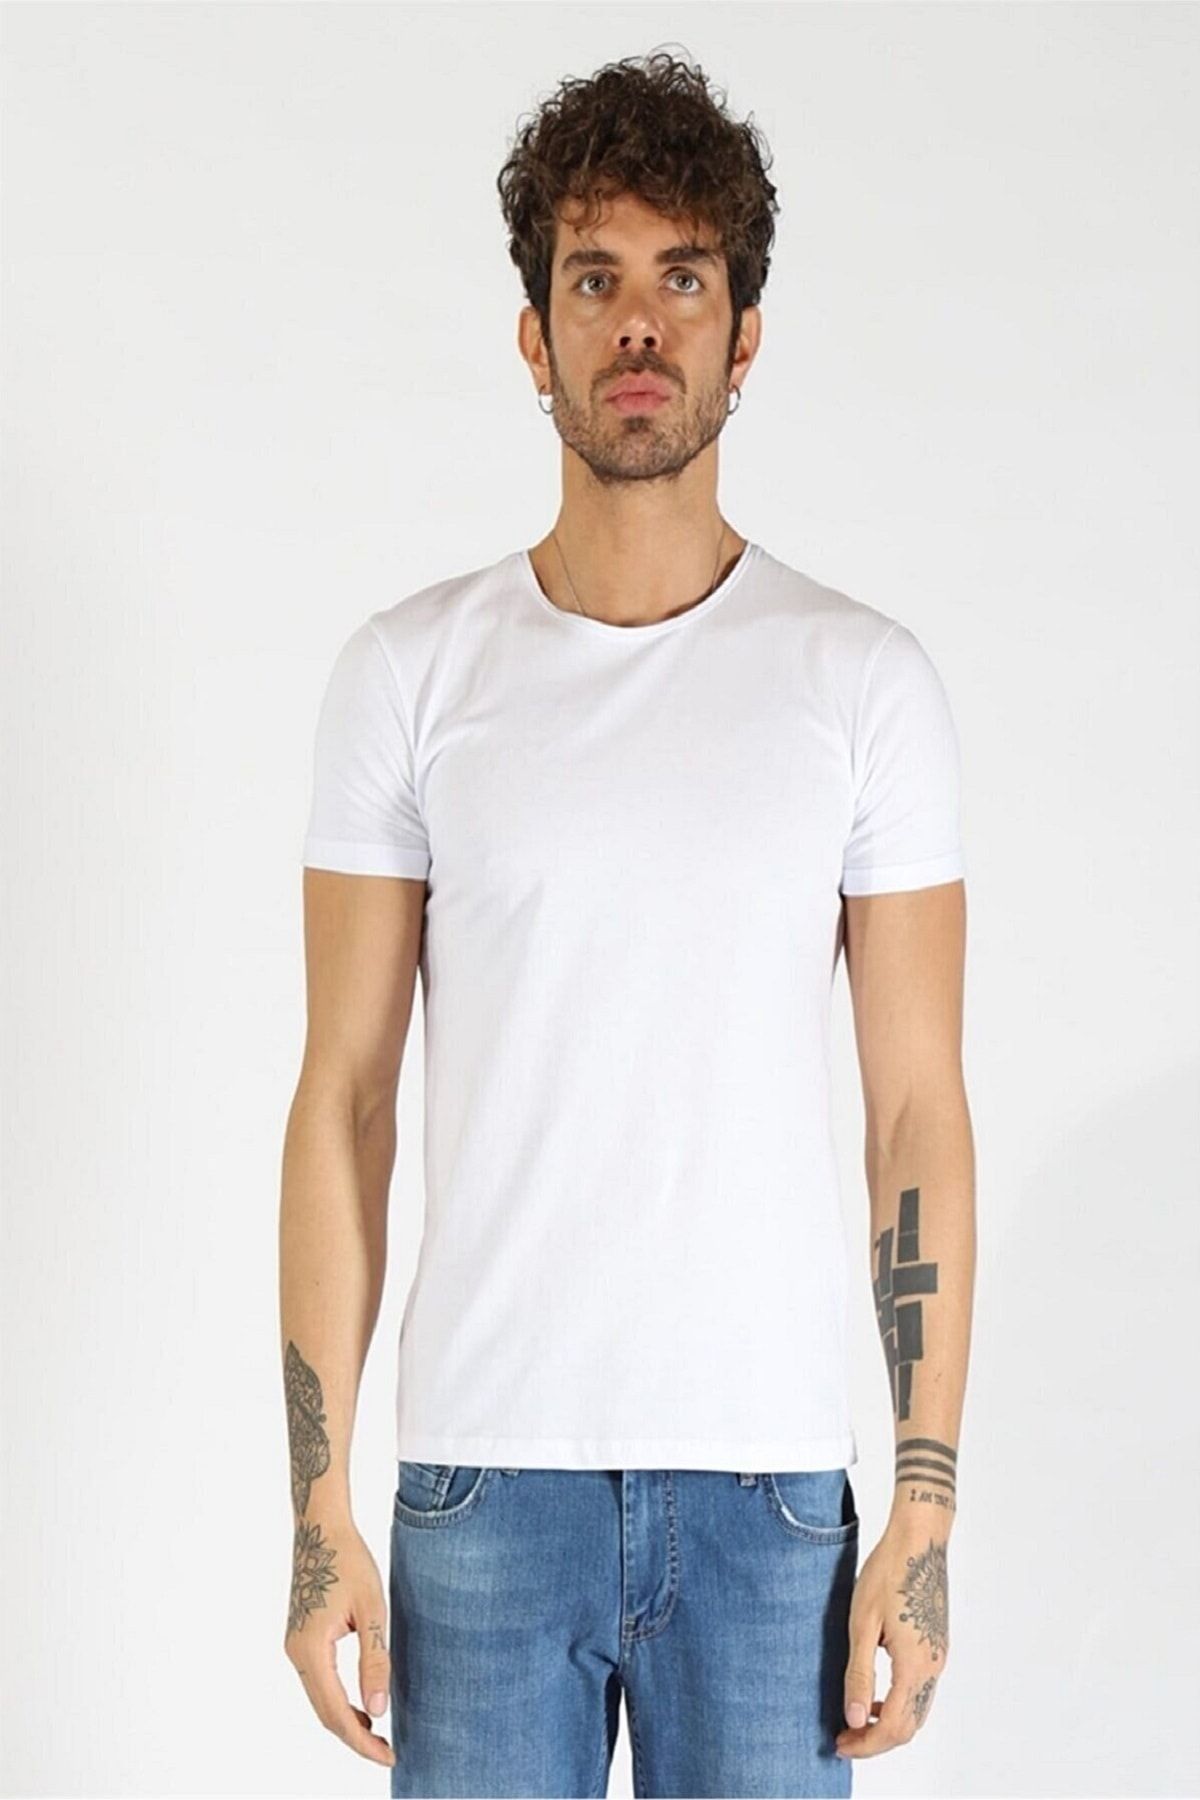 Twister Jeans Erkek Bisiklet Yaka Battal T-shirt Ets 1828 Beyaz